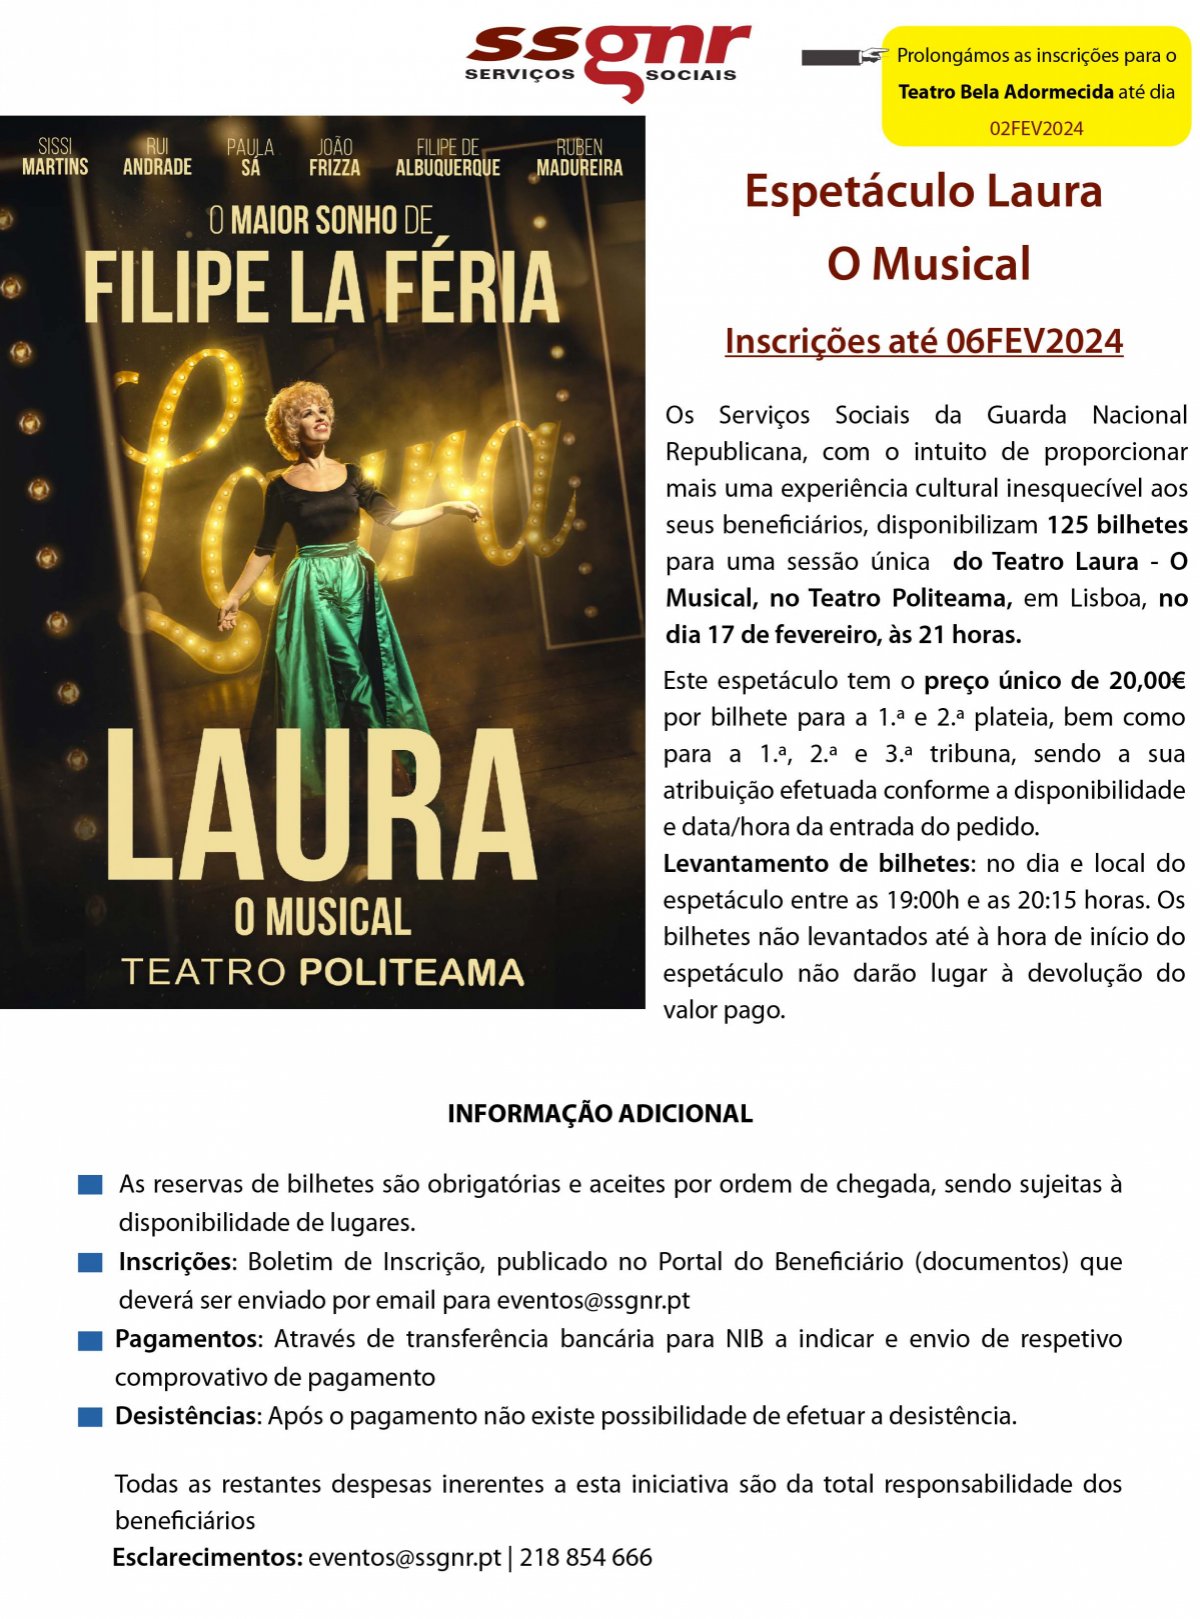 Teatro "Laura - O Musical" 